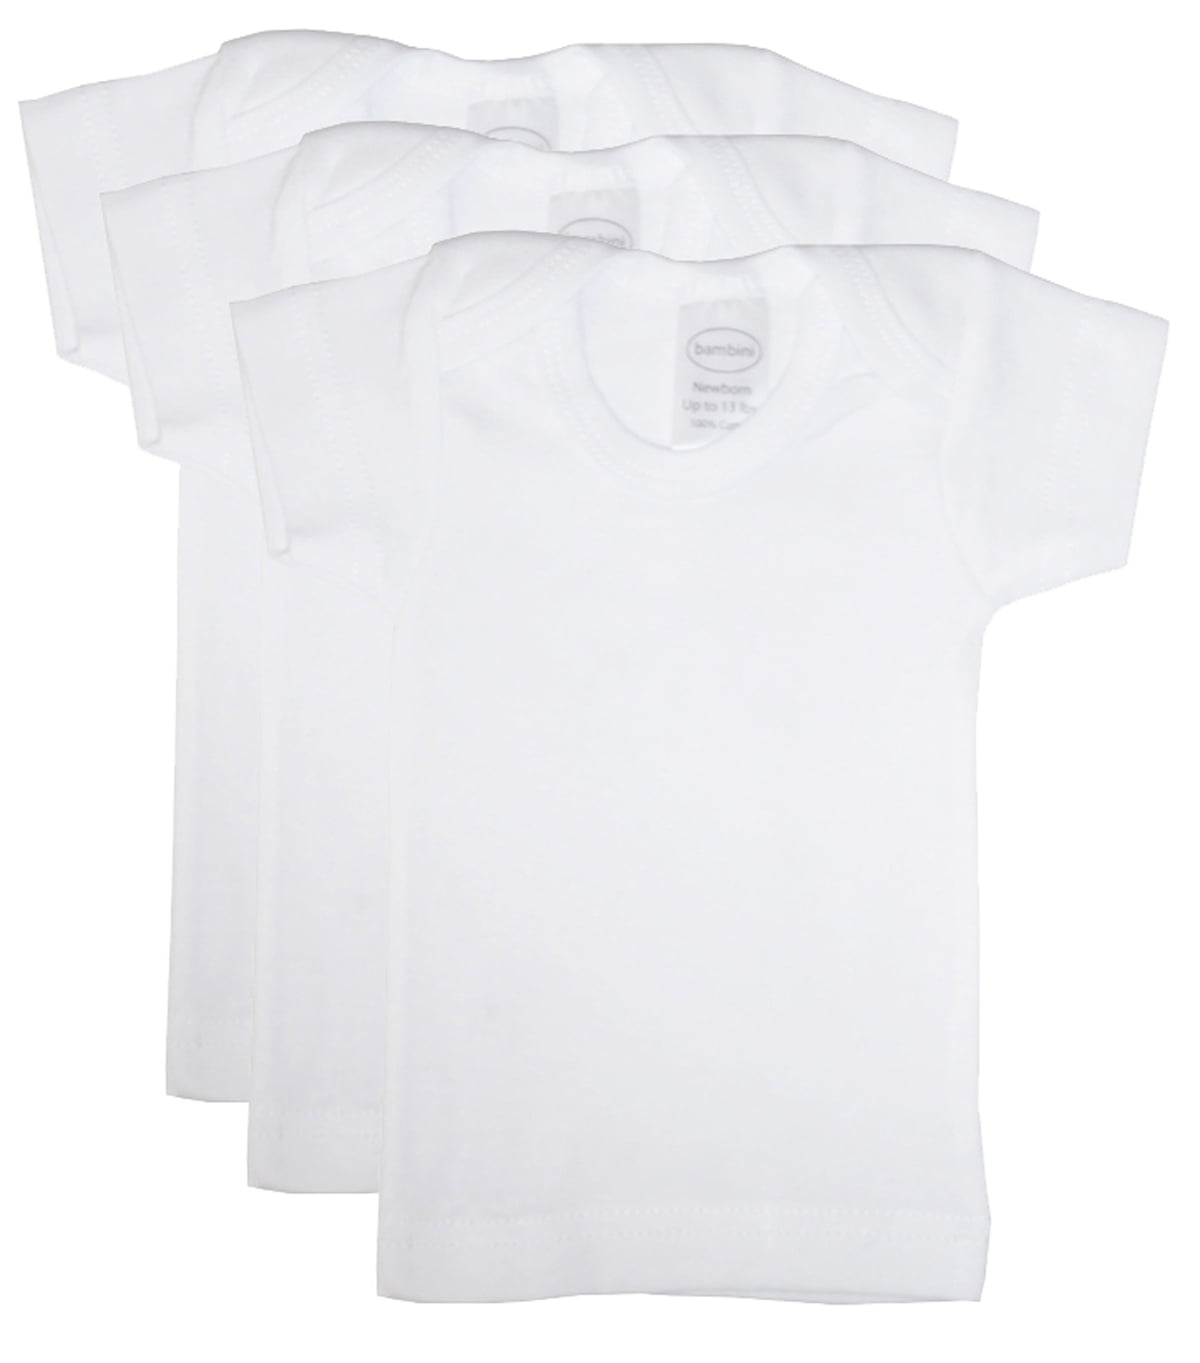 Bambini Preemie White Short Sleeve Lap T-Shirts, 3pk (Baby Boys or Baby ...